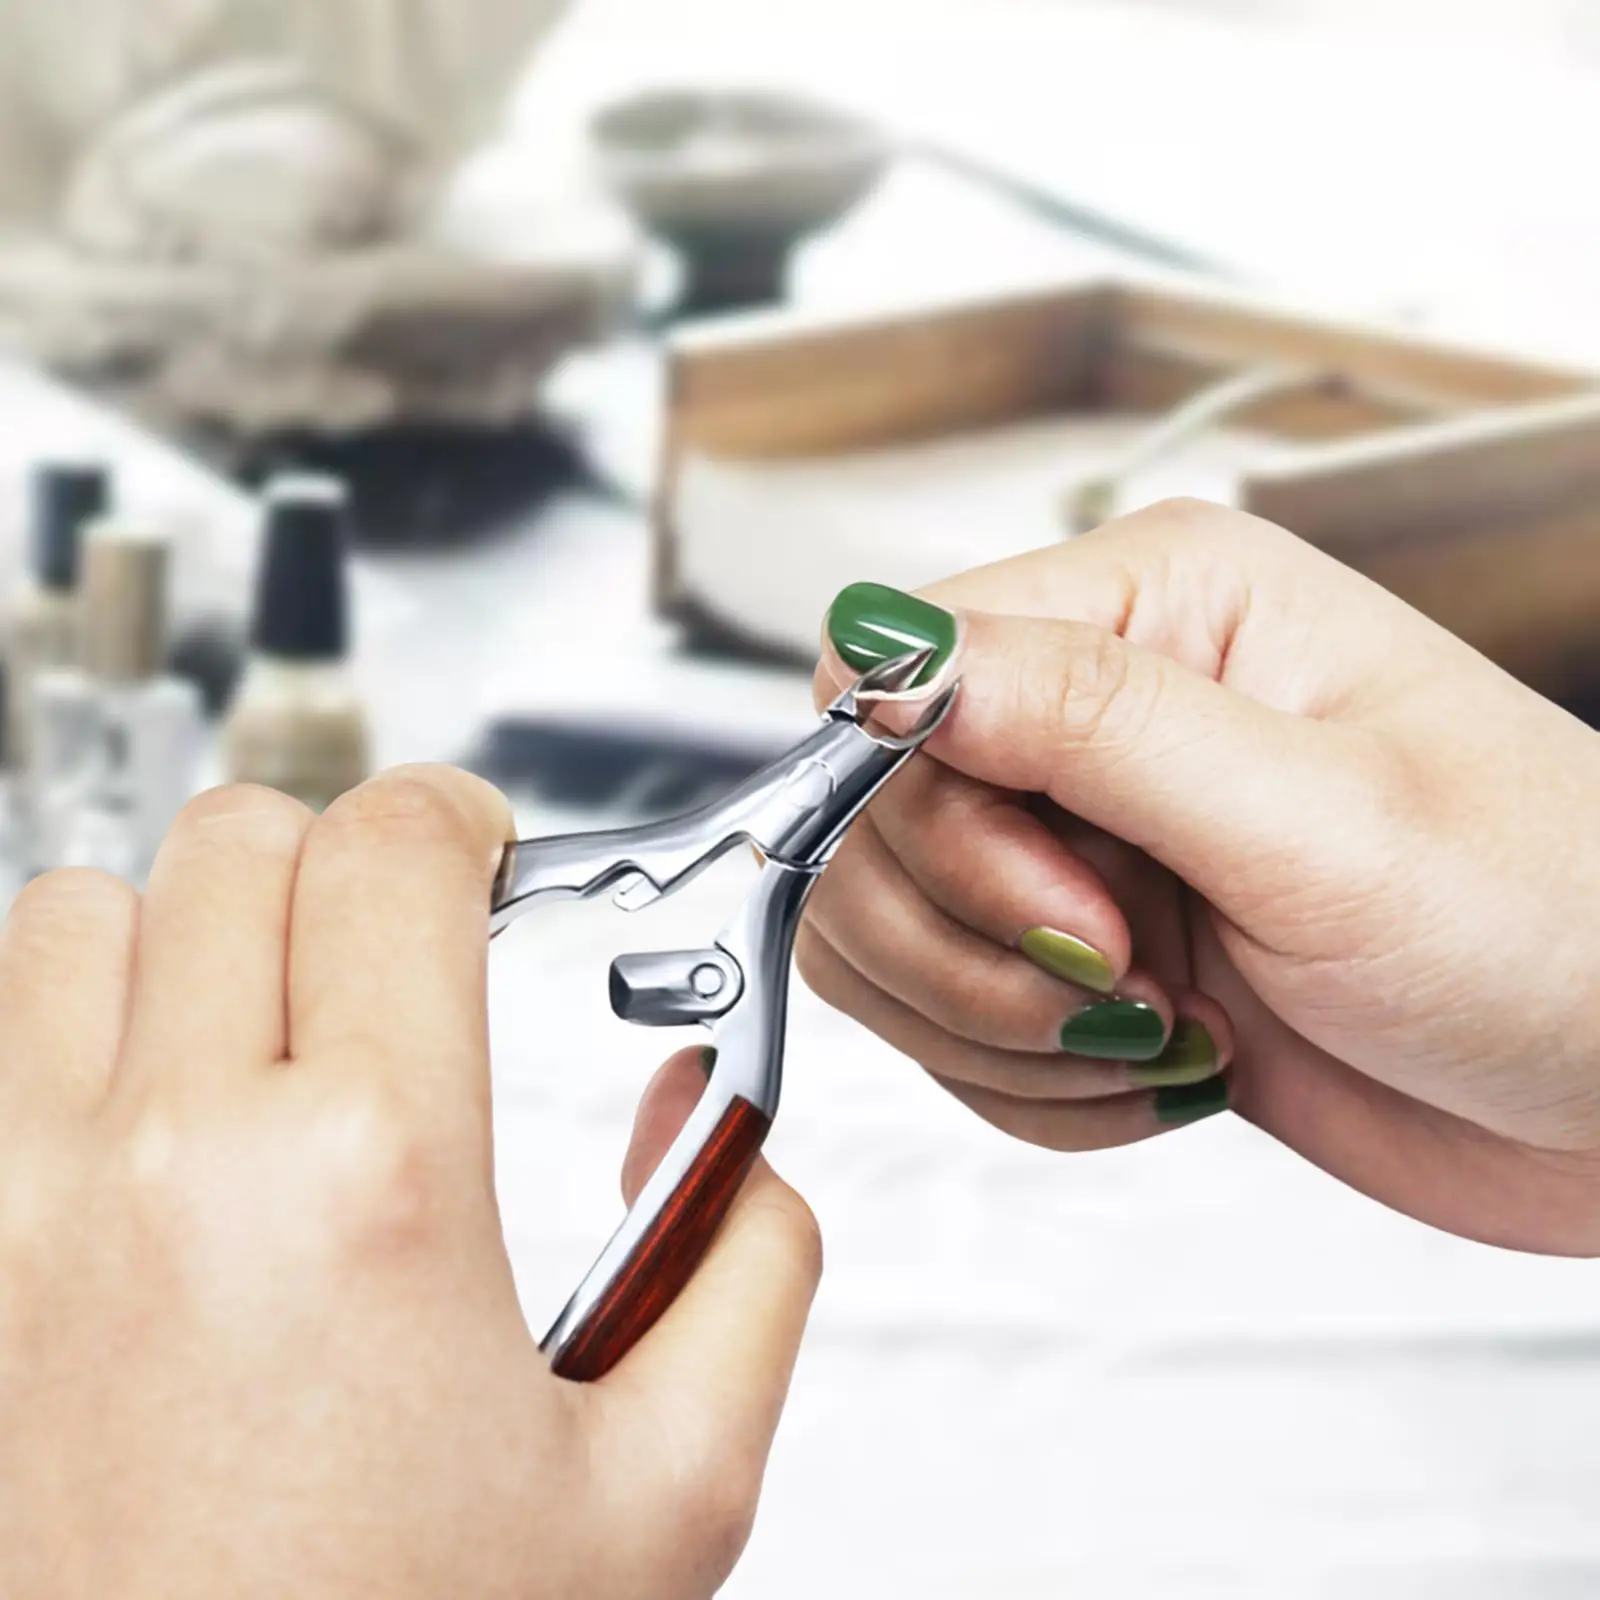 Manicure Nippers Pedicure Manicure Tools Remover for Fingernails Toenails